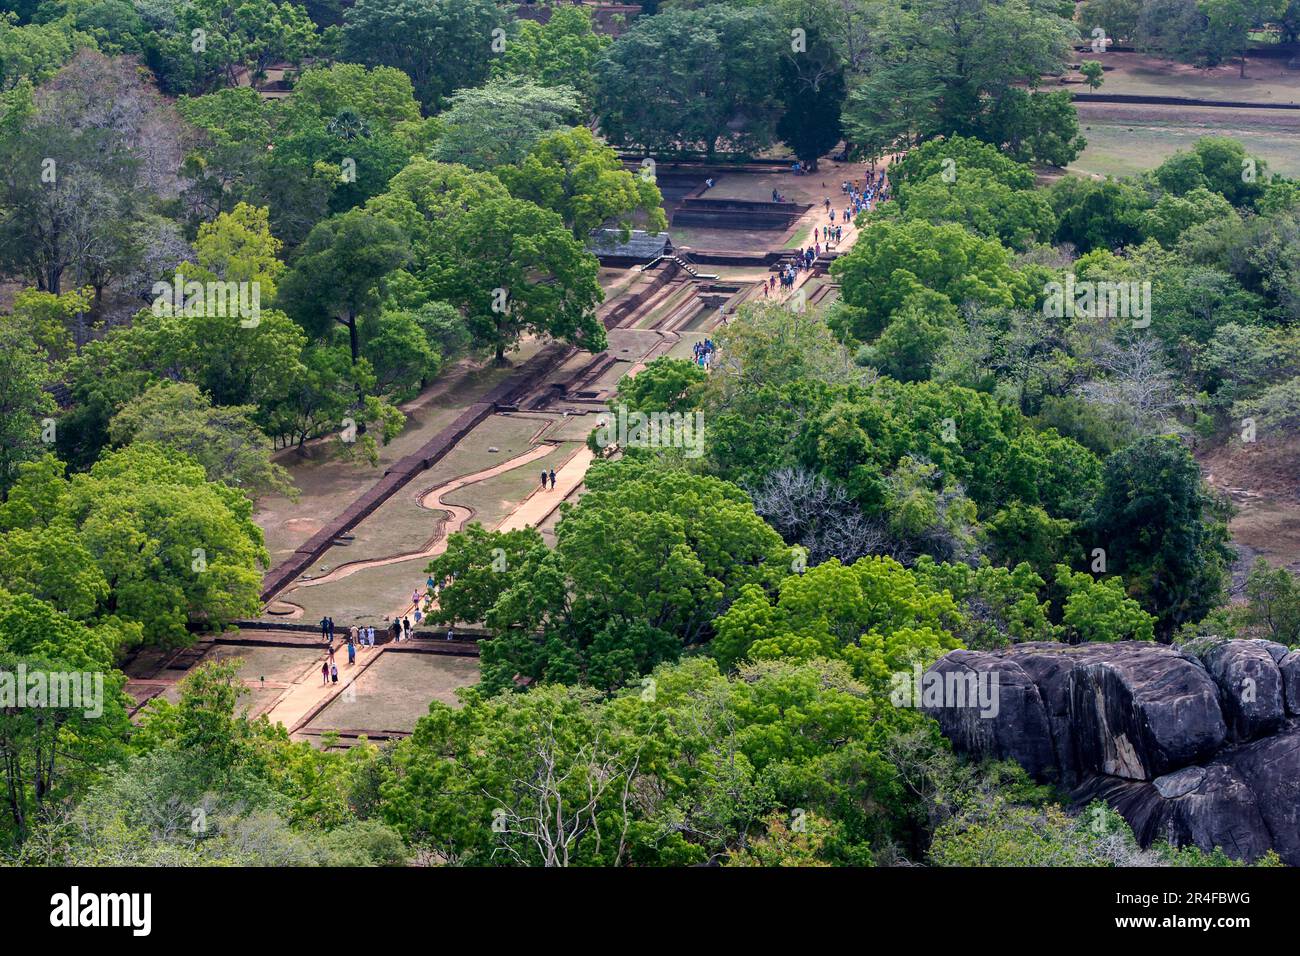 Visitors to Sigiriya Rock Fortress in central Sri Lanka walk through the ruins of the Royal Gardens. Stock Photo